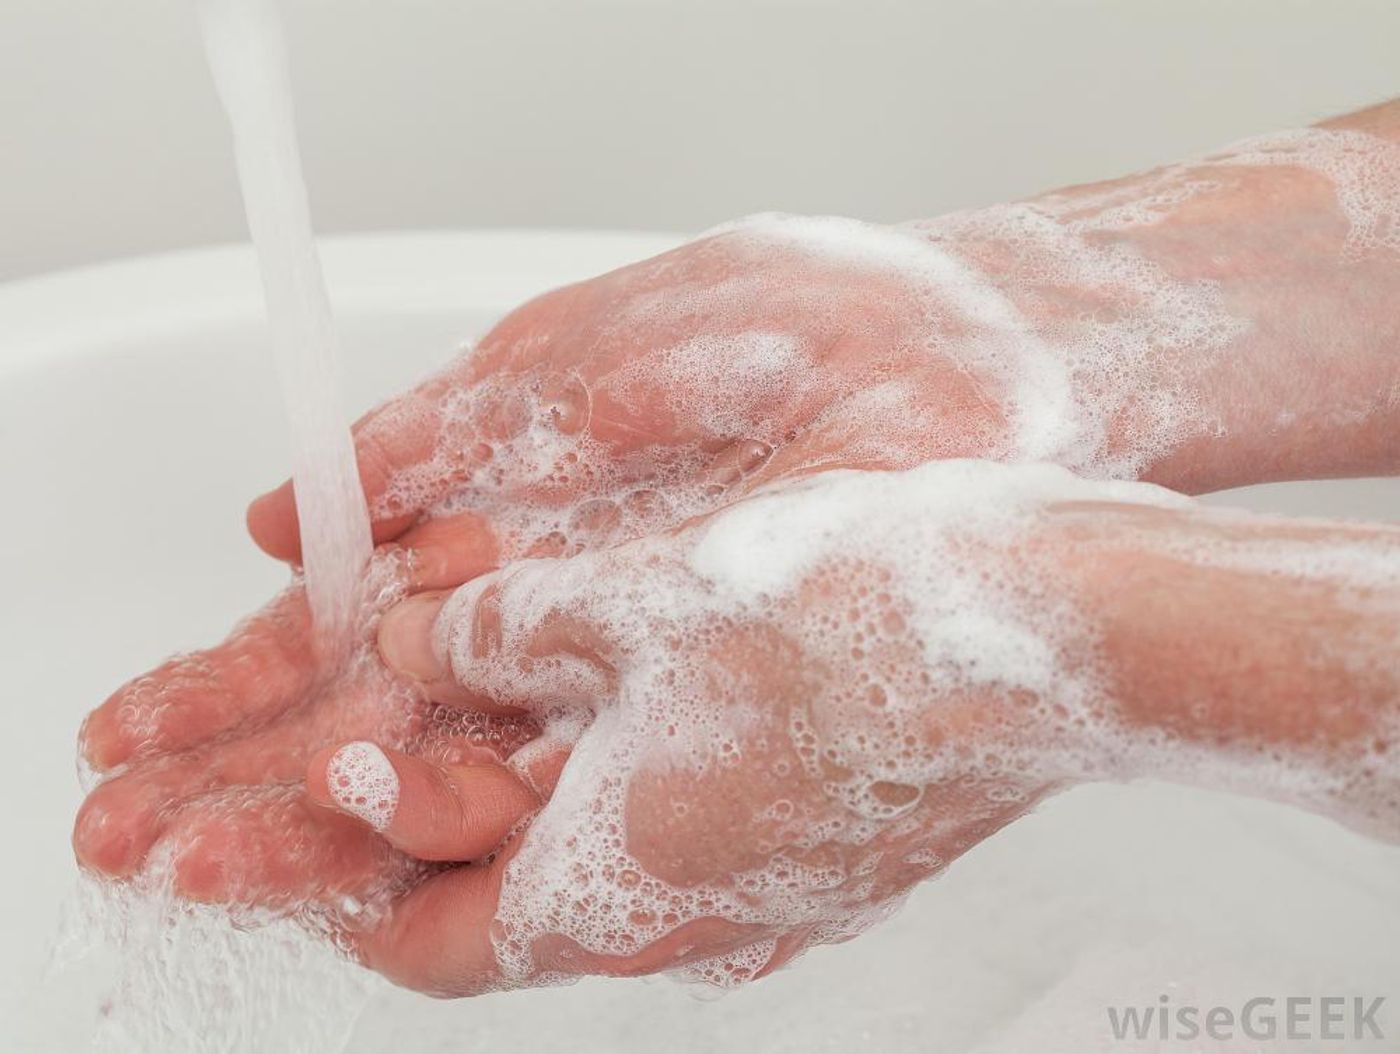 Regular soap is just as effective as antibacterial soap at eliminating bacteria.